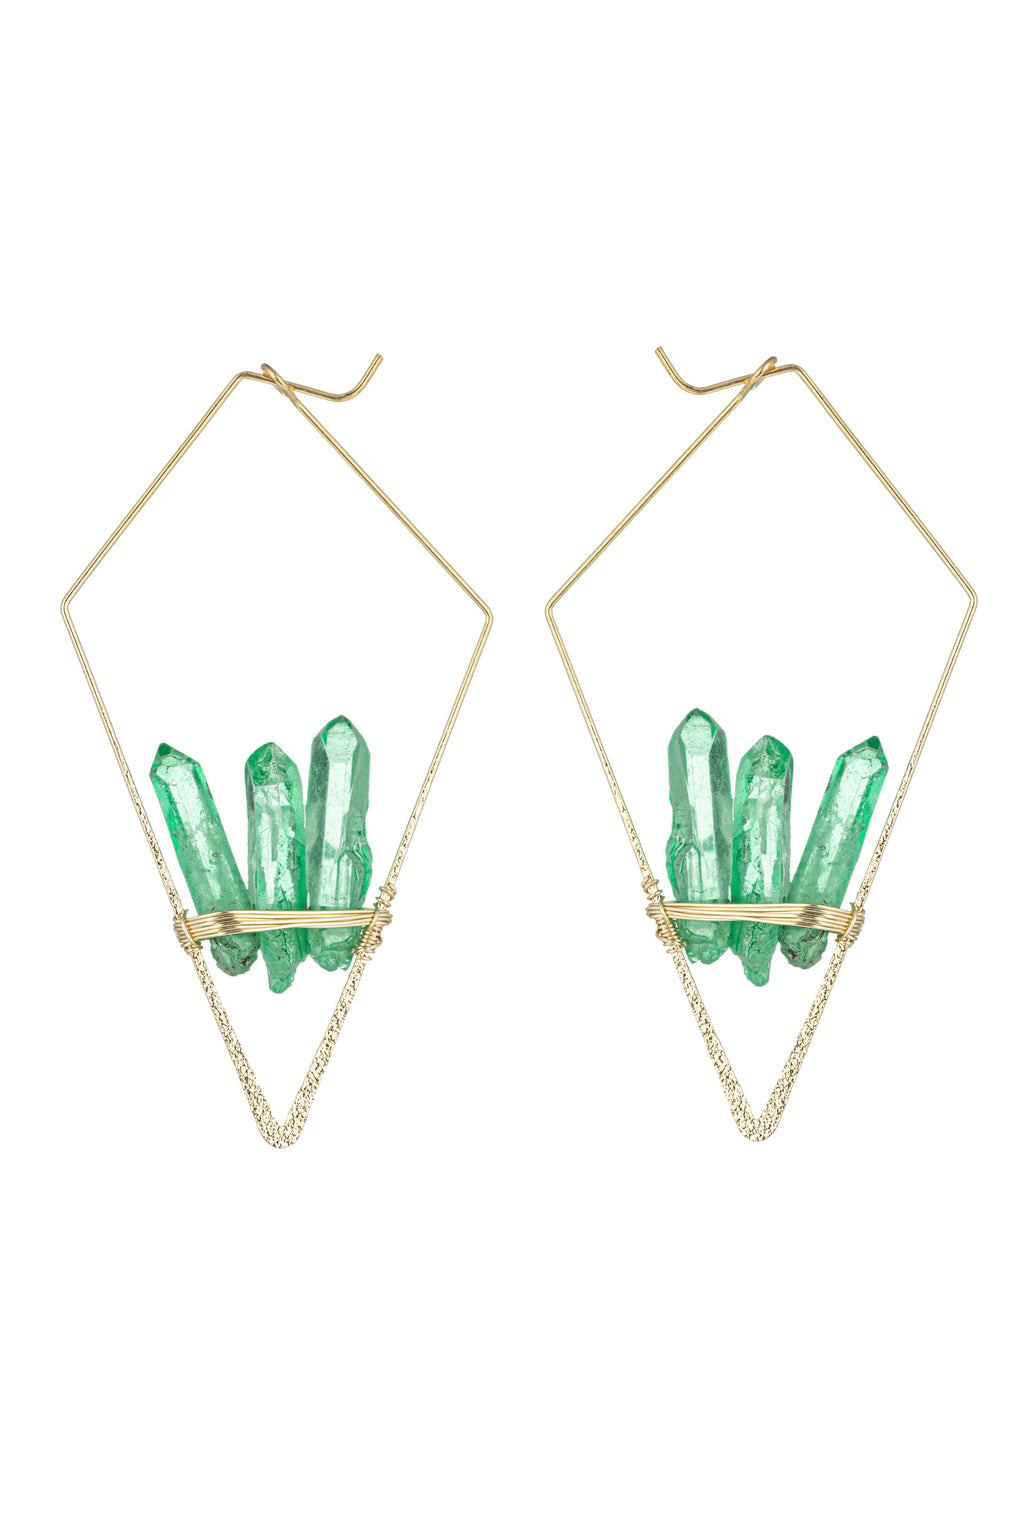 Gold tone brass kite earrings with green quartz stones.